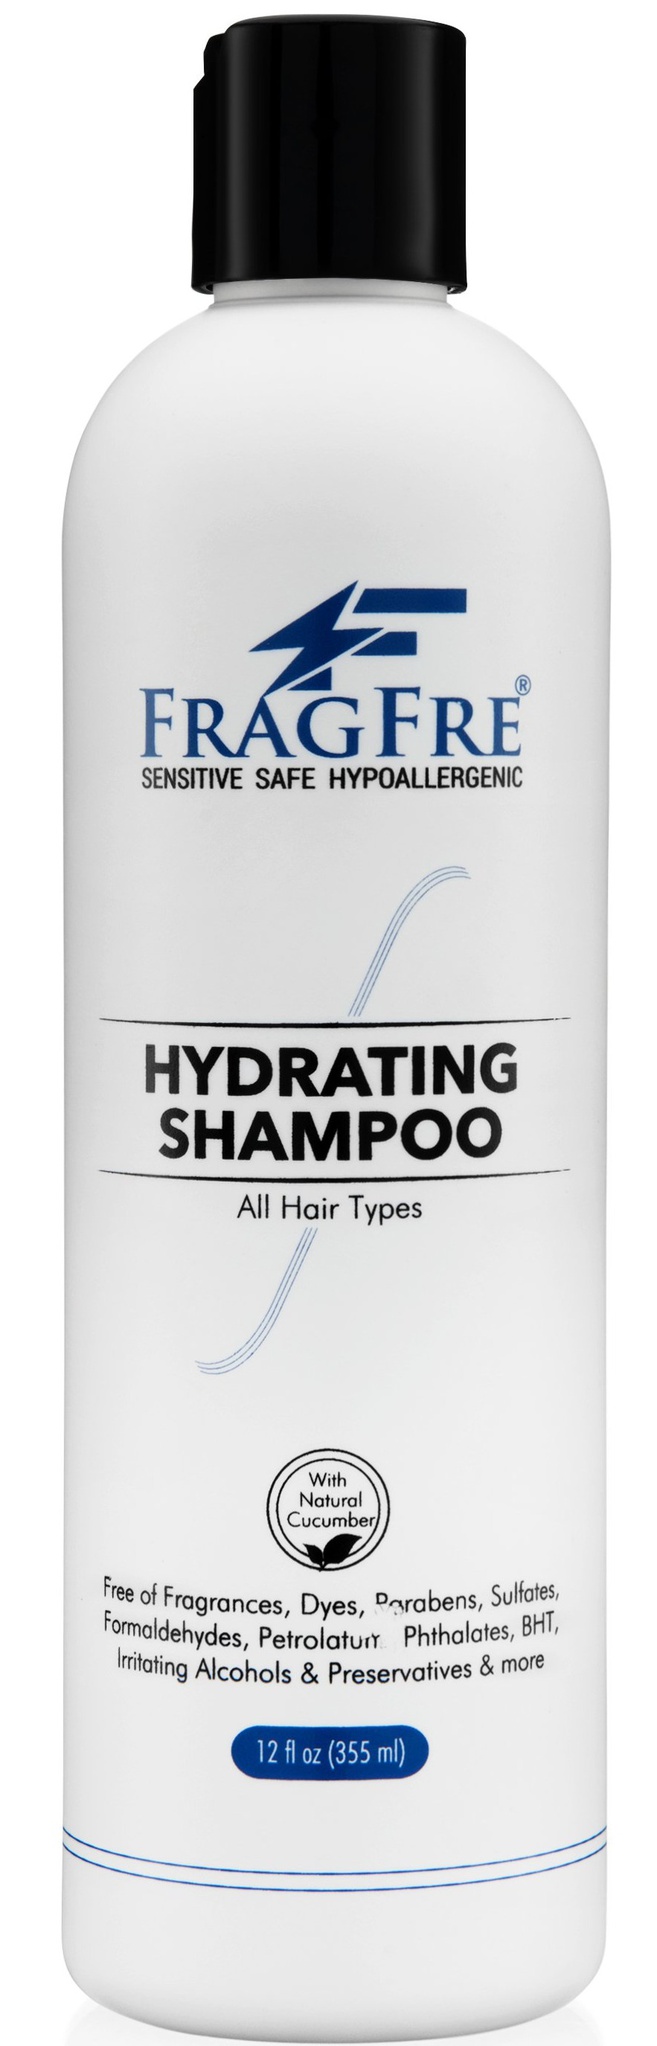 Fragfre Hydrating Shampoo